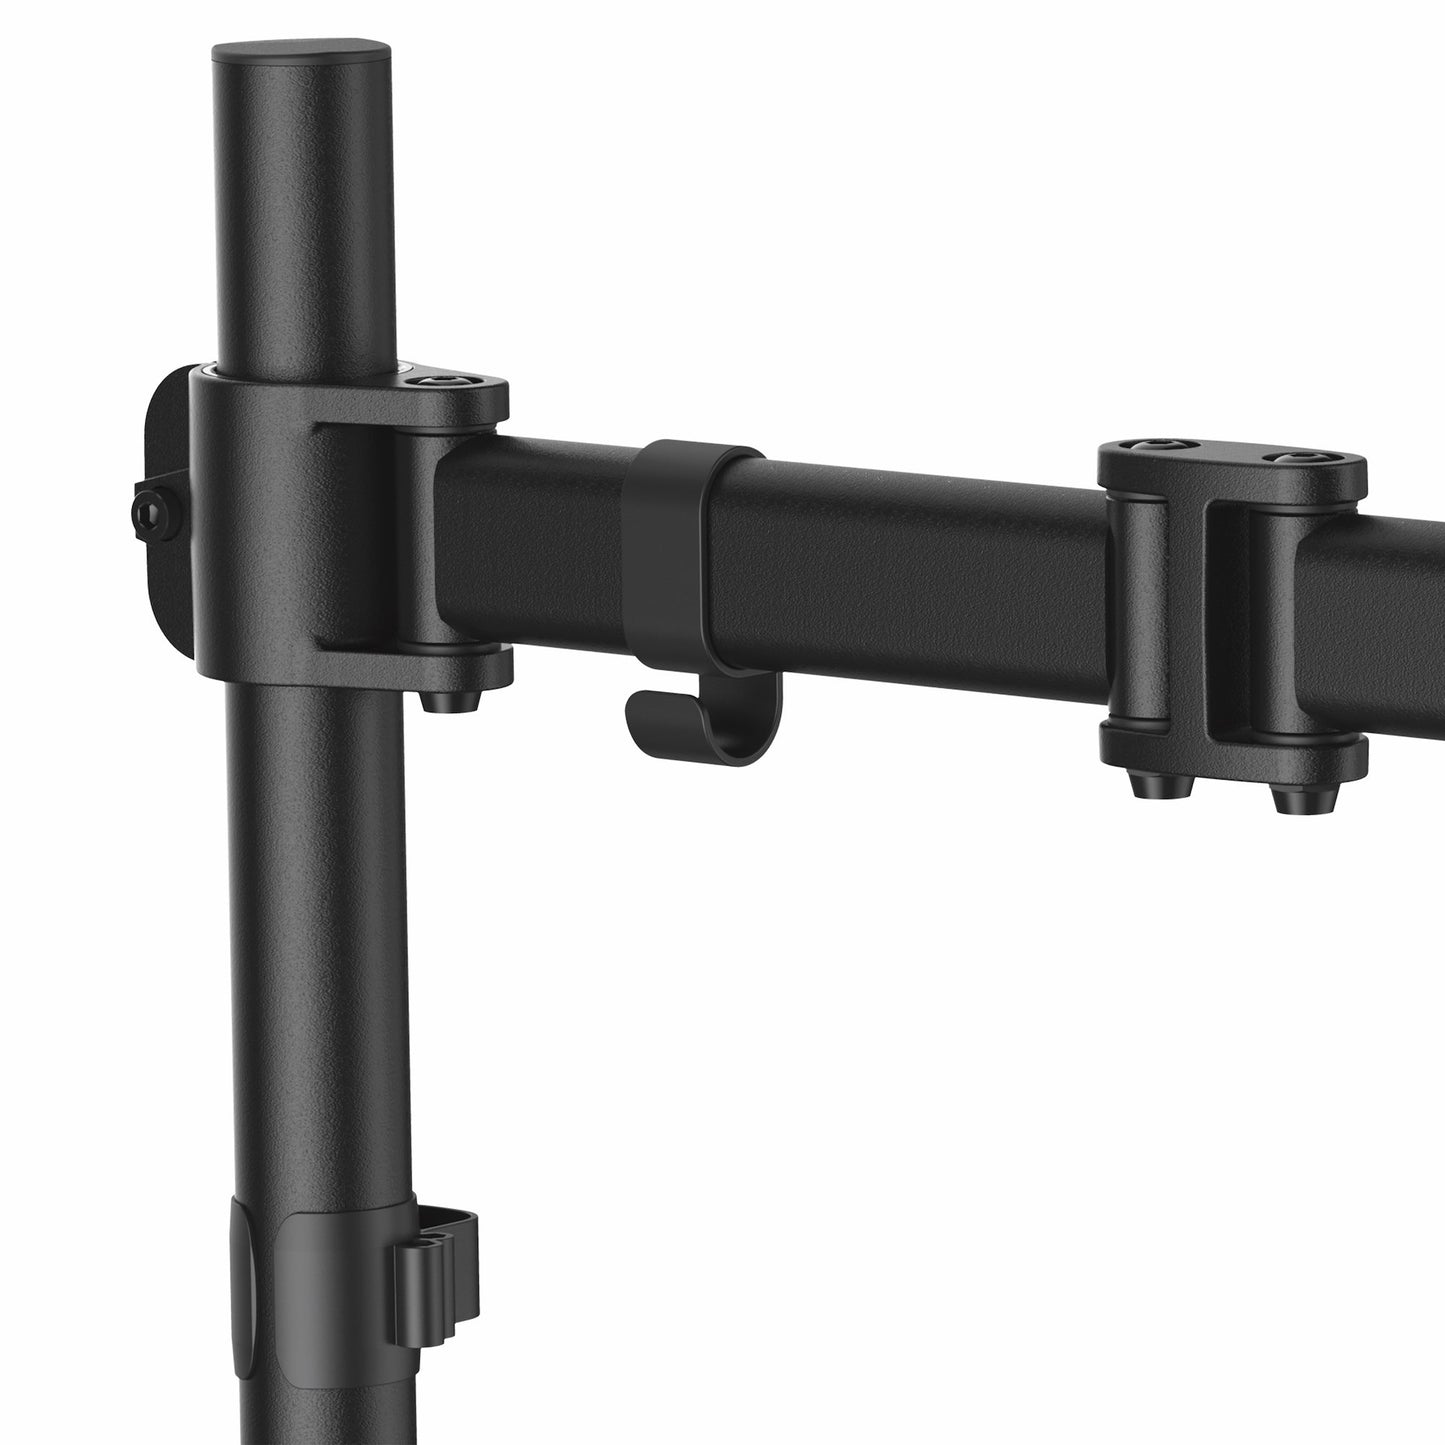 StarTech.com Desk Mount Monitor Arm for up to 34" (8 kg) VESA Compatible Displays - Articulating Pole Mount Single Monitor Arm - Ergonomic Height Adjustable Monitor Mount - Desk Clamp/Grommet-2